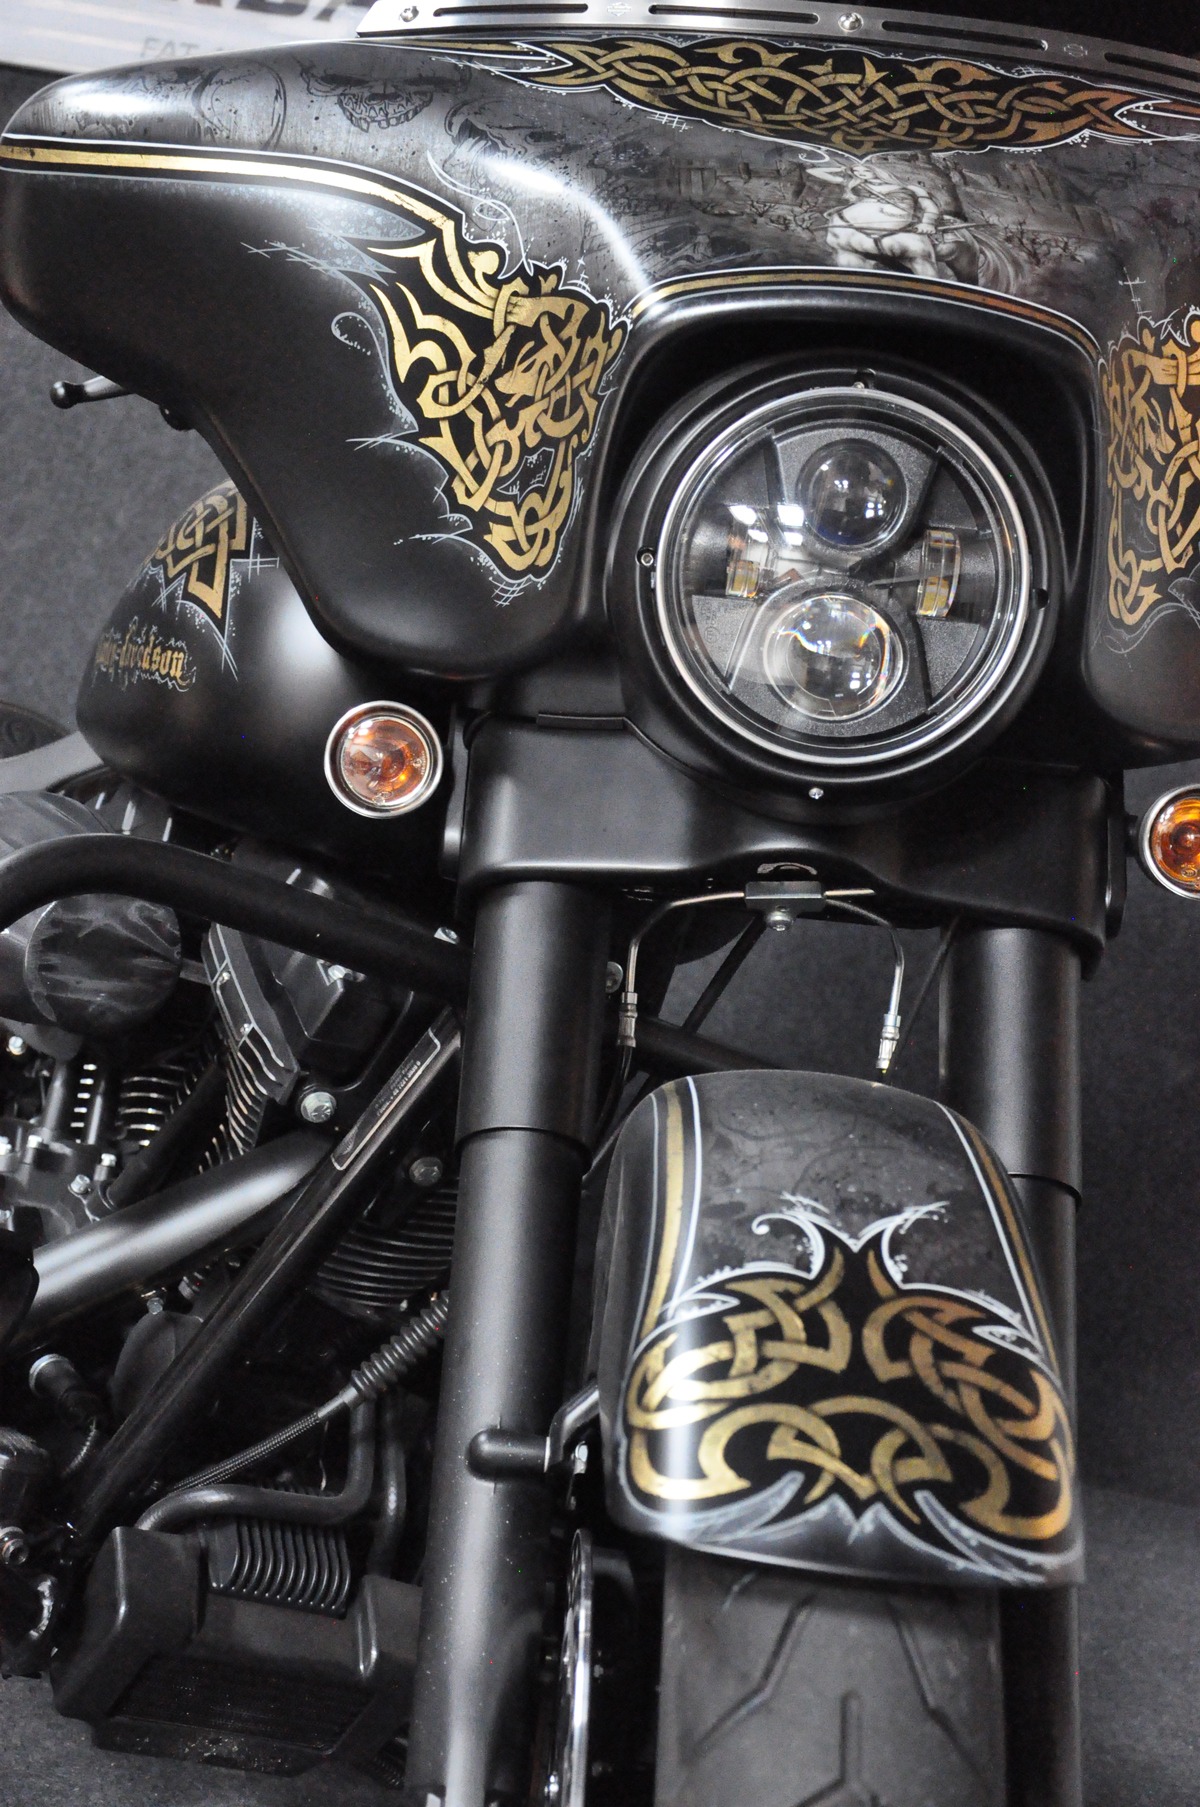 Harley Bagger Endstufe - Custombike und Harley-Davidson Werkstatt